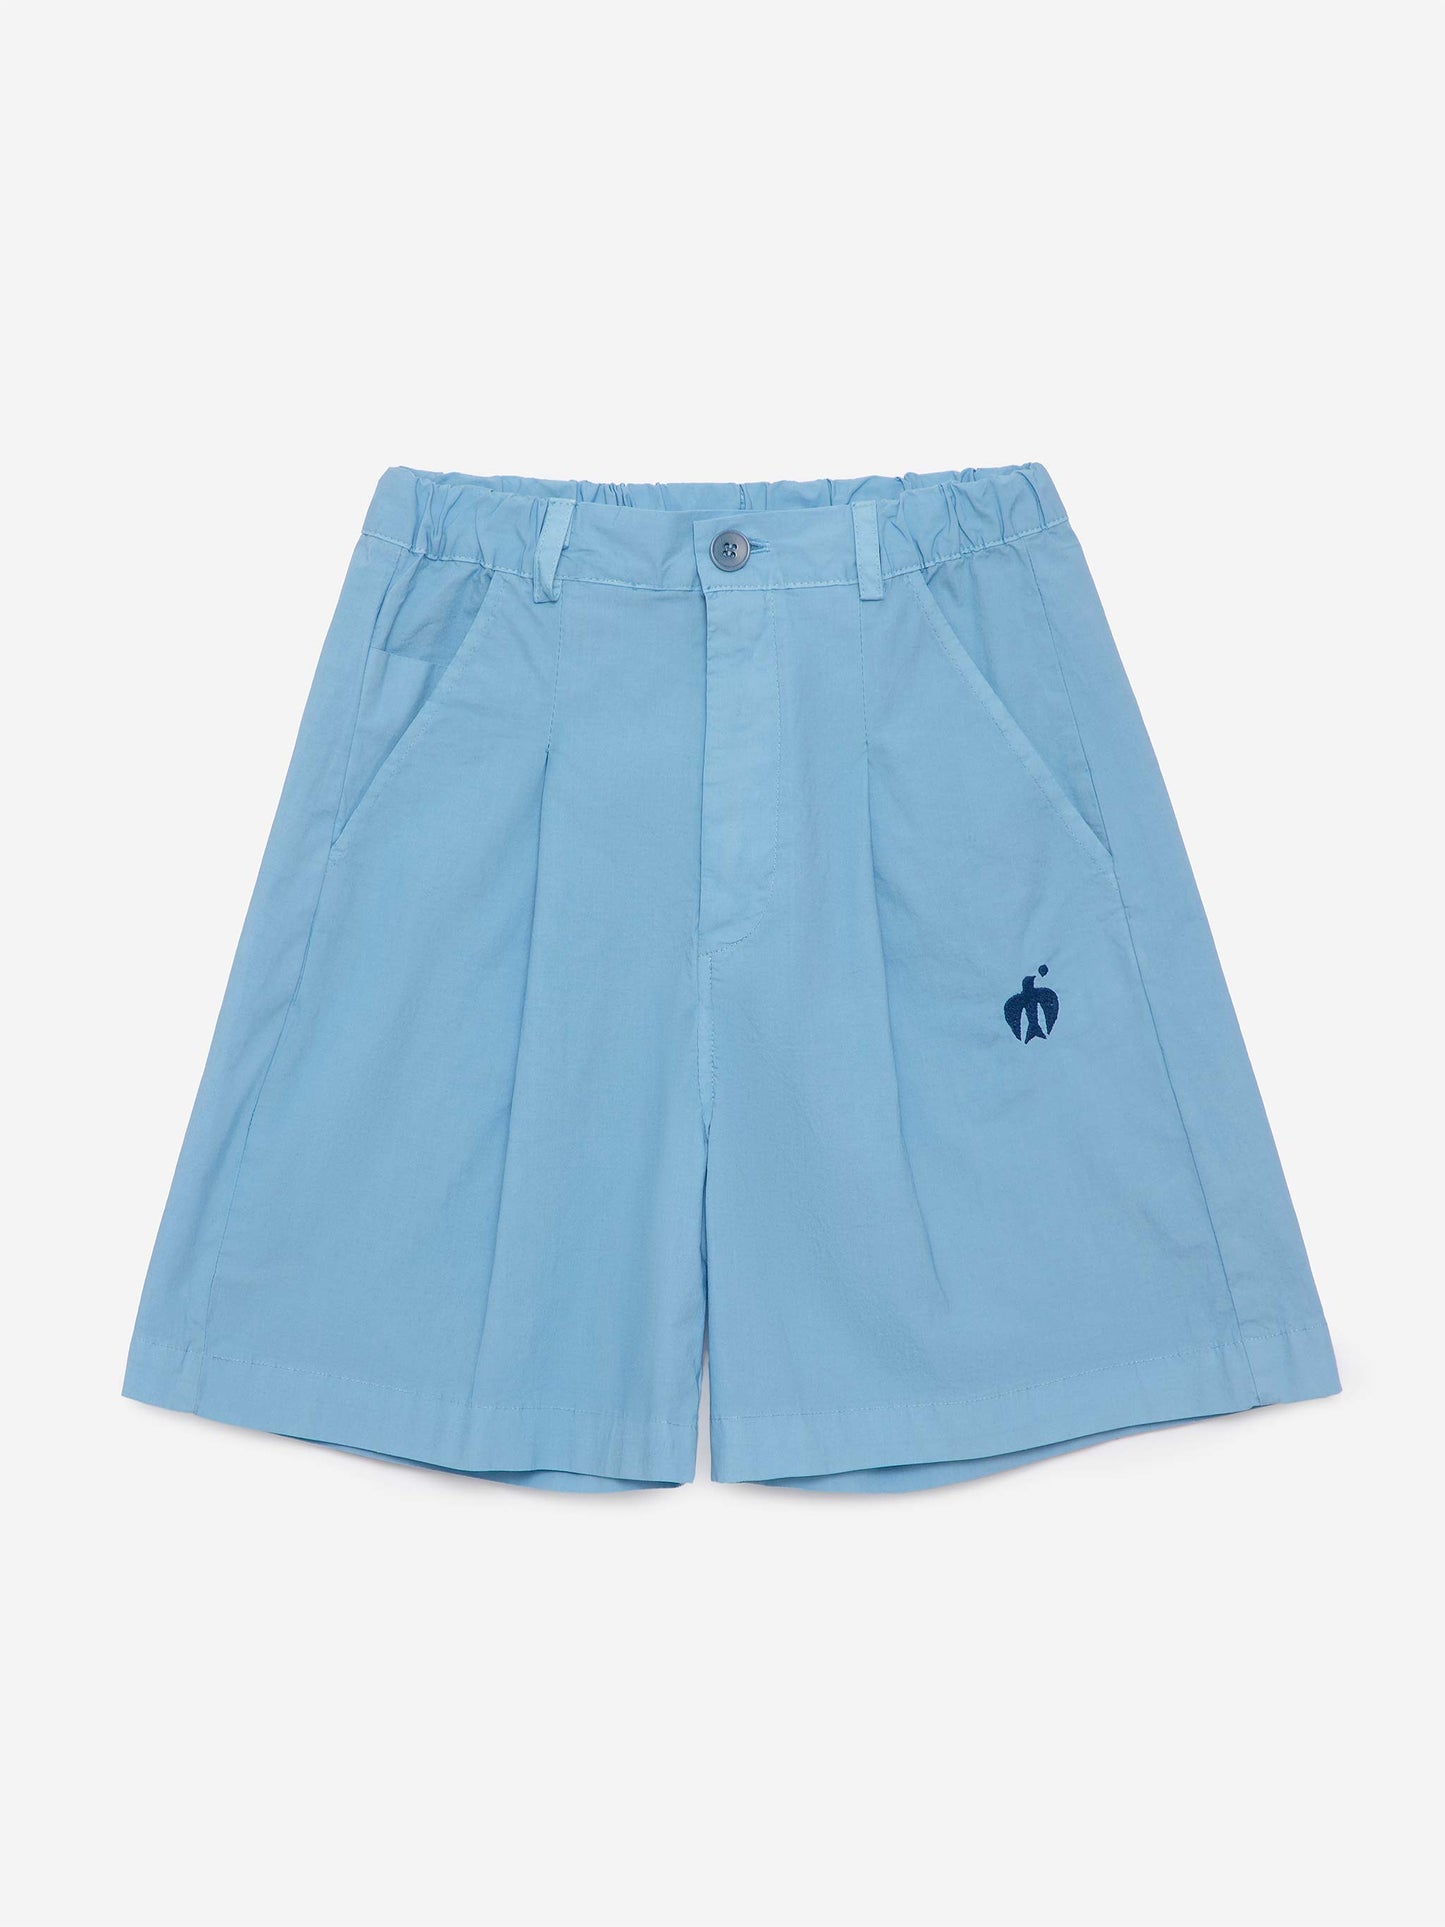 Shorts nº08 Glacier Blue